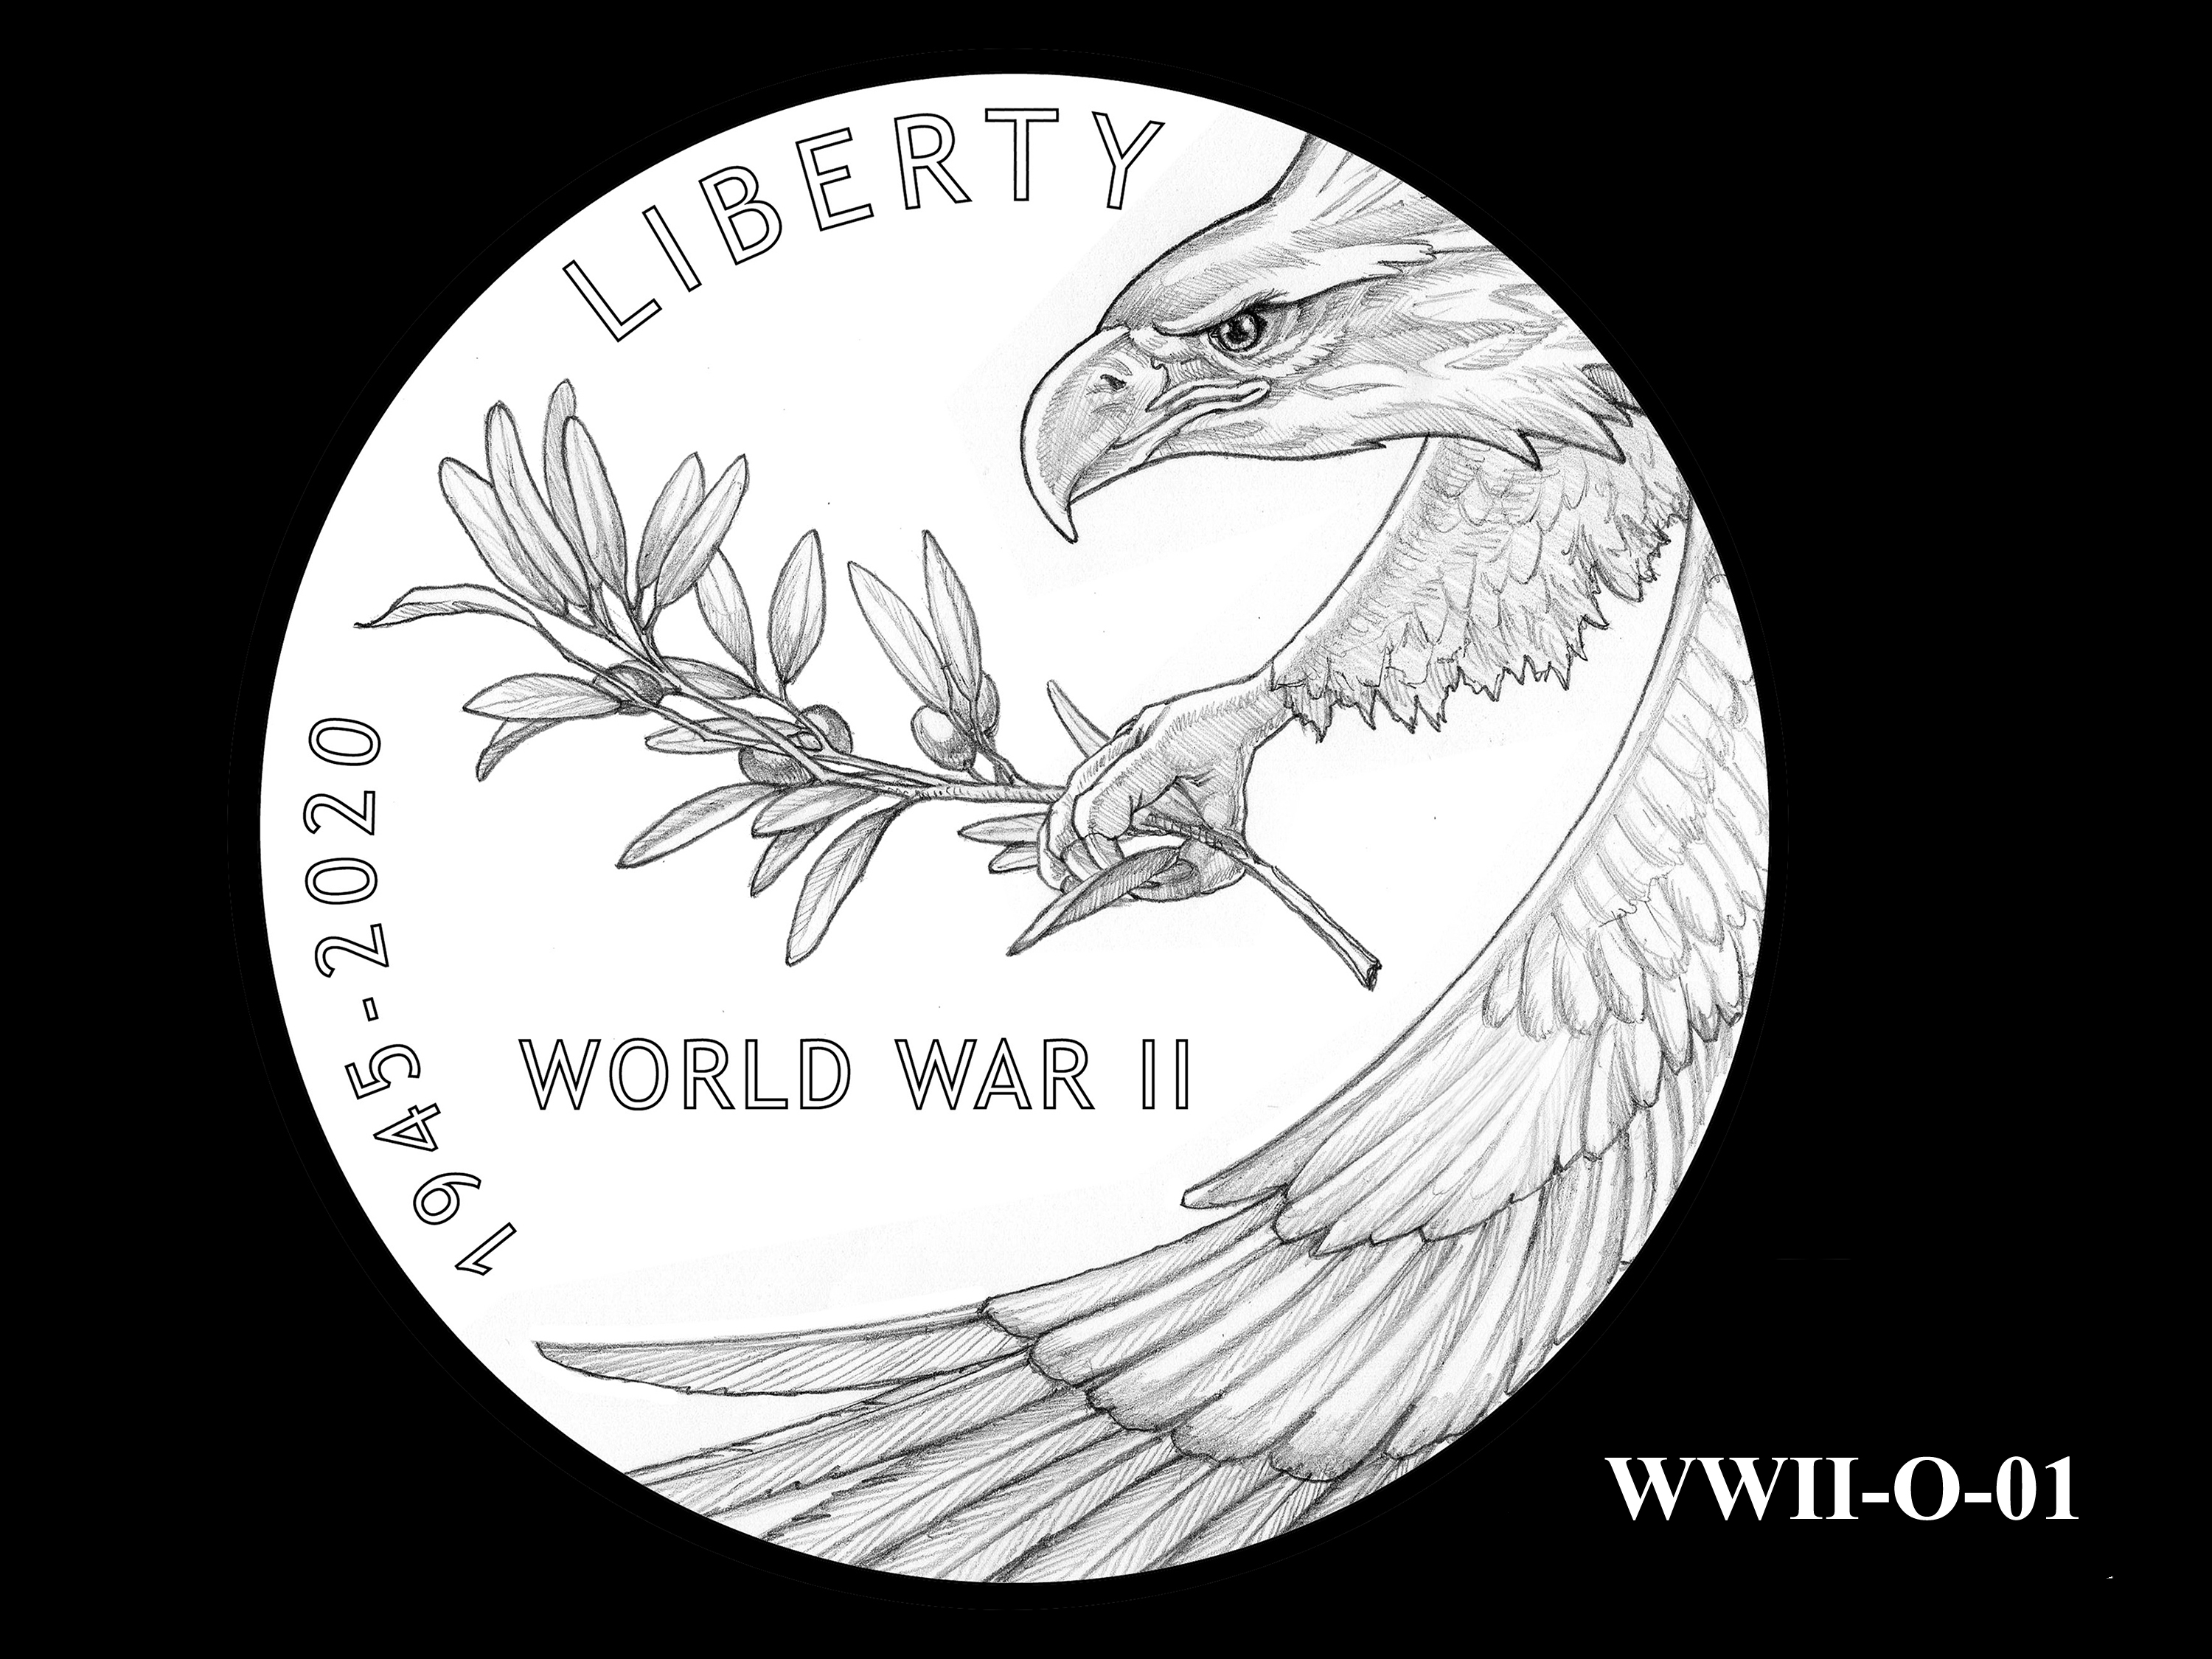 WWII-O-01 --End of World War II 75th Anniversary Program - Obverse